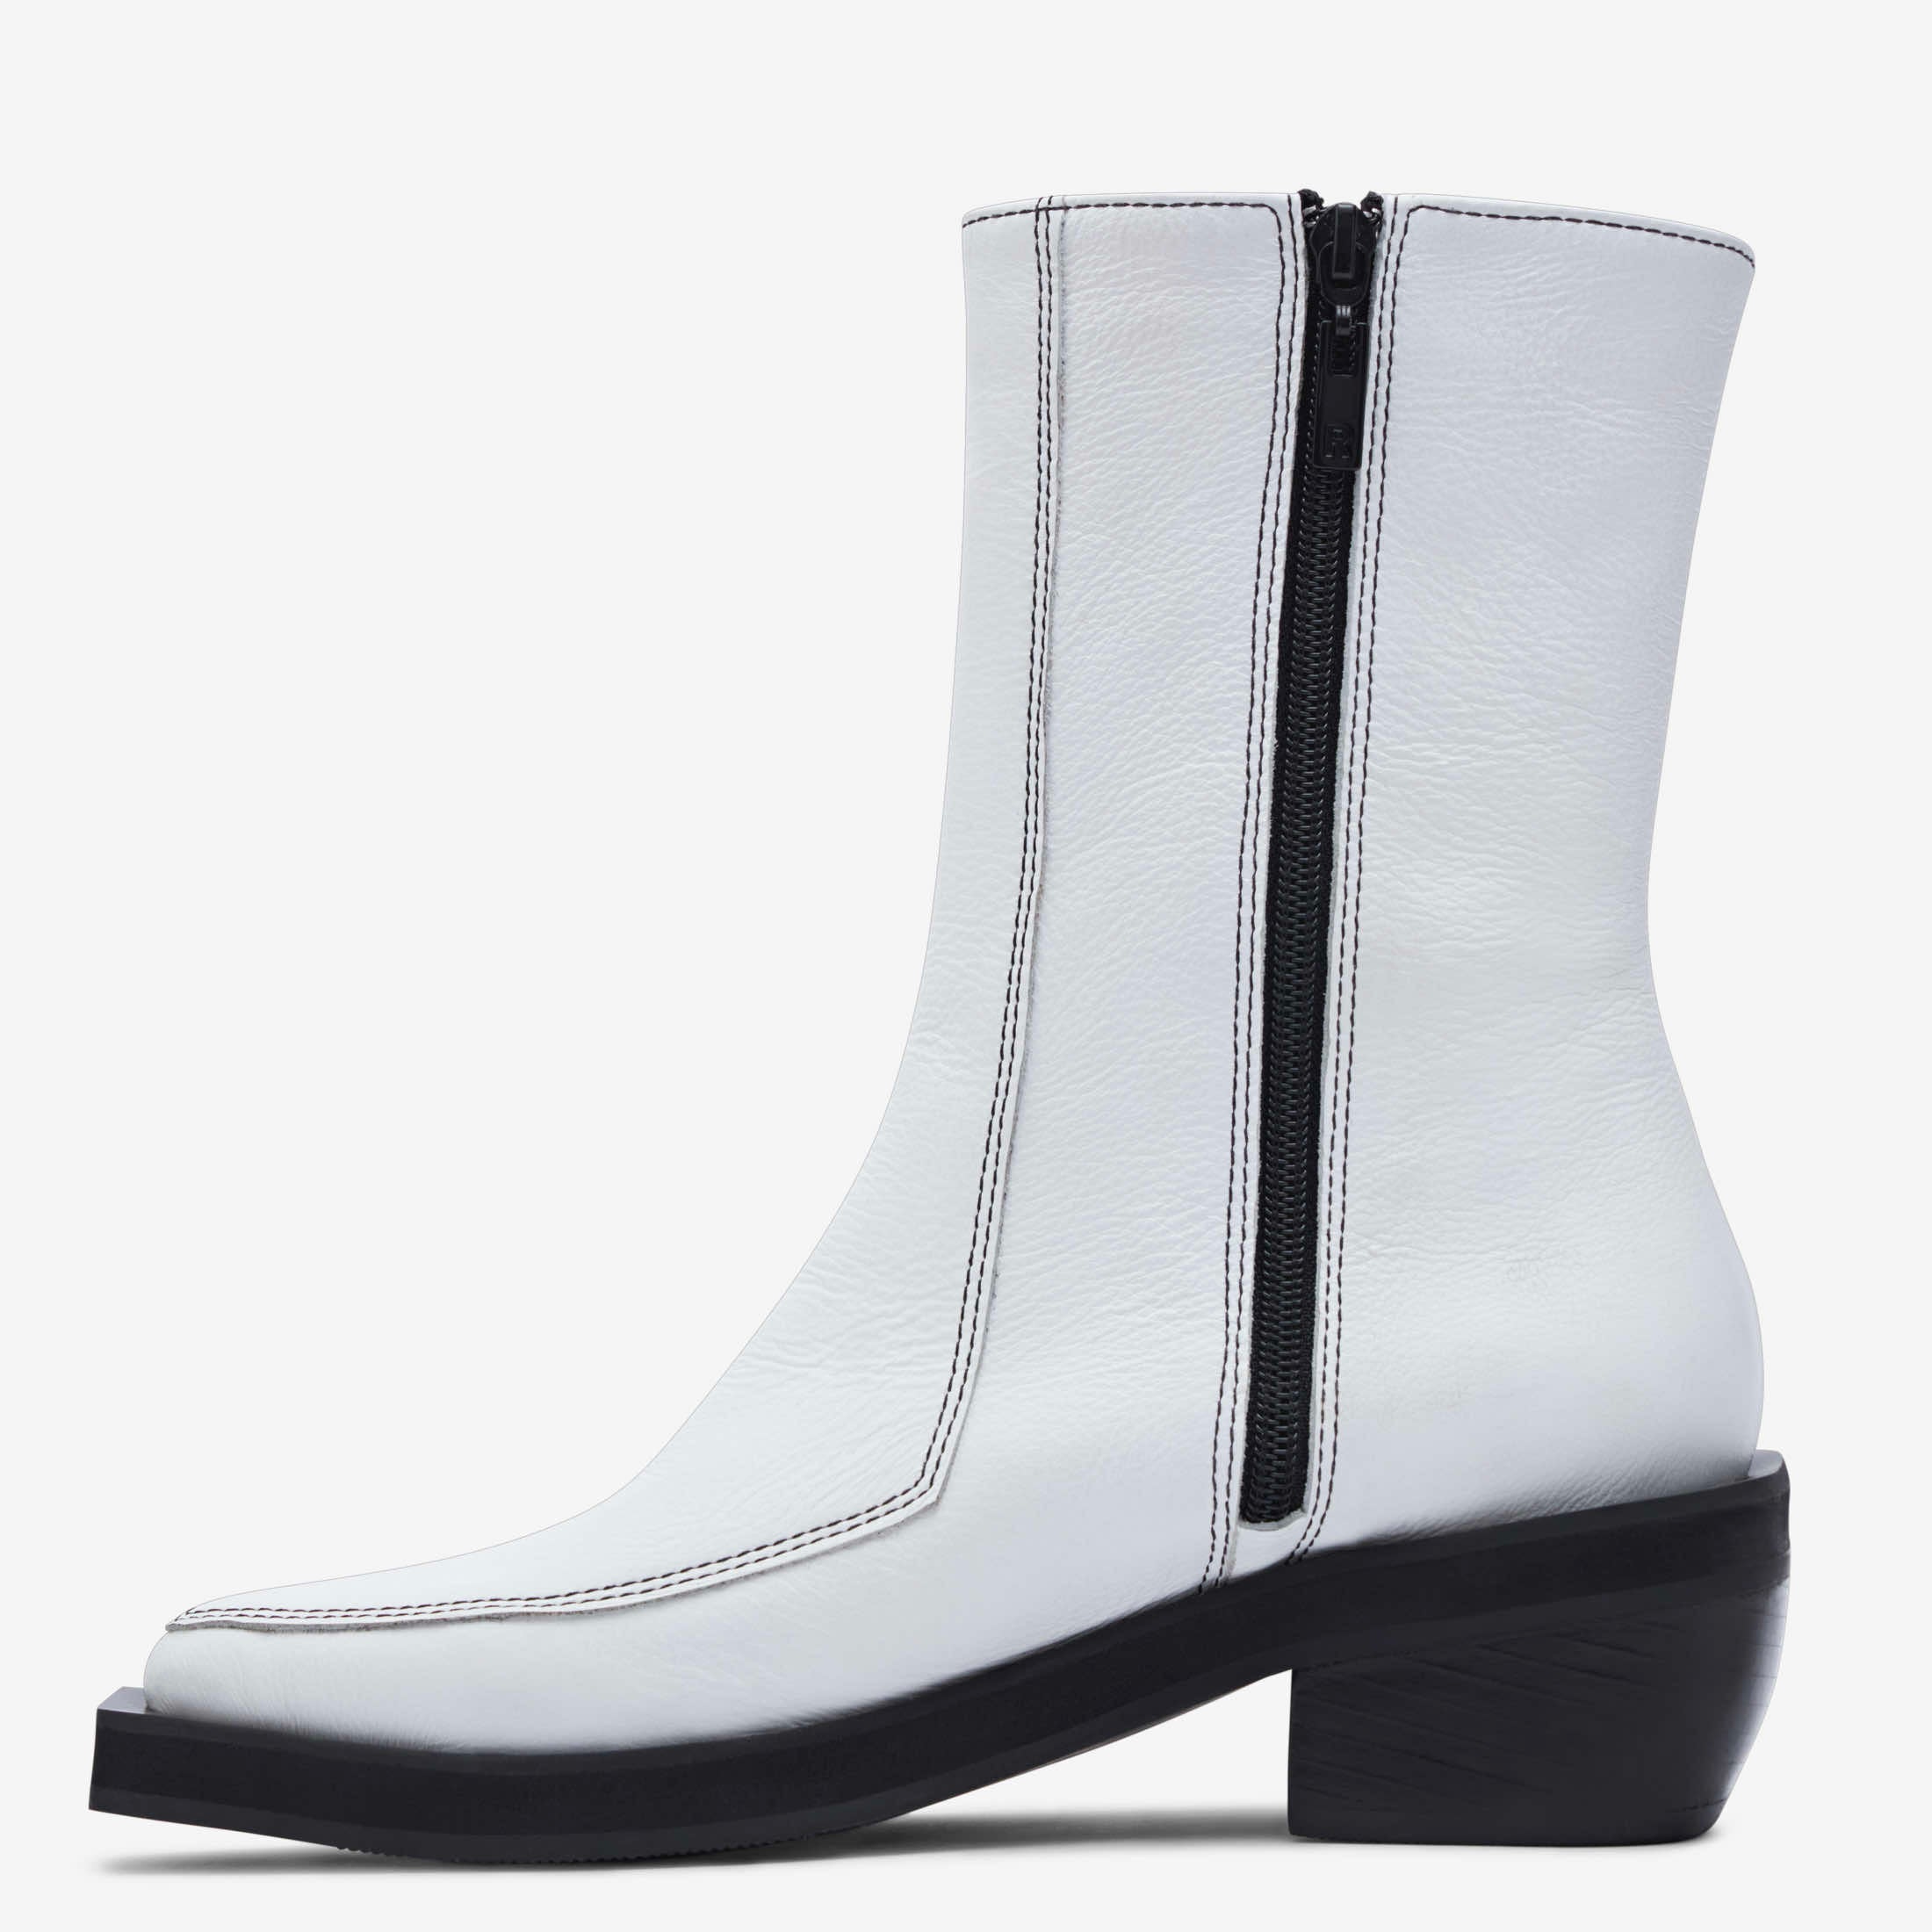 Todqot Tdoqot Womens Waterproof Boots- Christmas Gifts Fashion Thin Heel Mid-Heel Women's Mid Calf Boots Black 37, Size: 6.5